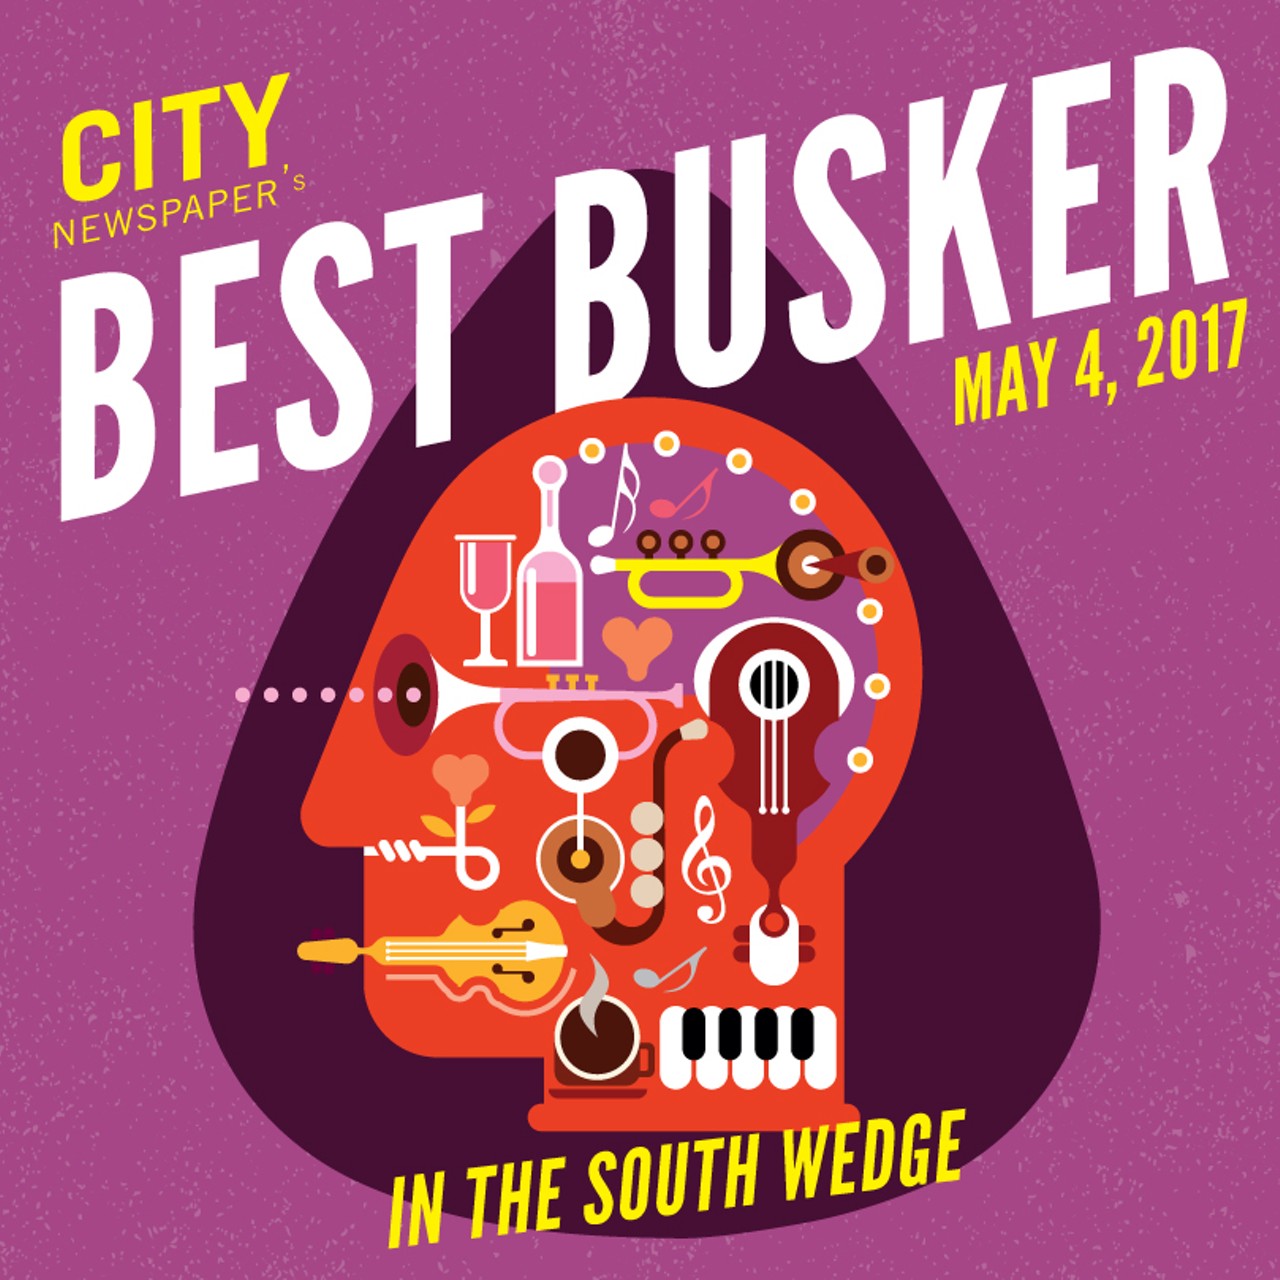 CITY Newspaper’s 2017 Best Busker Contest